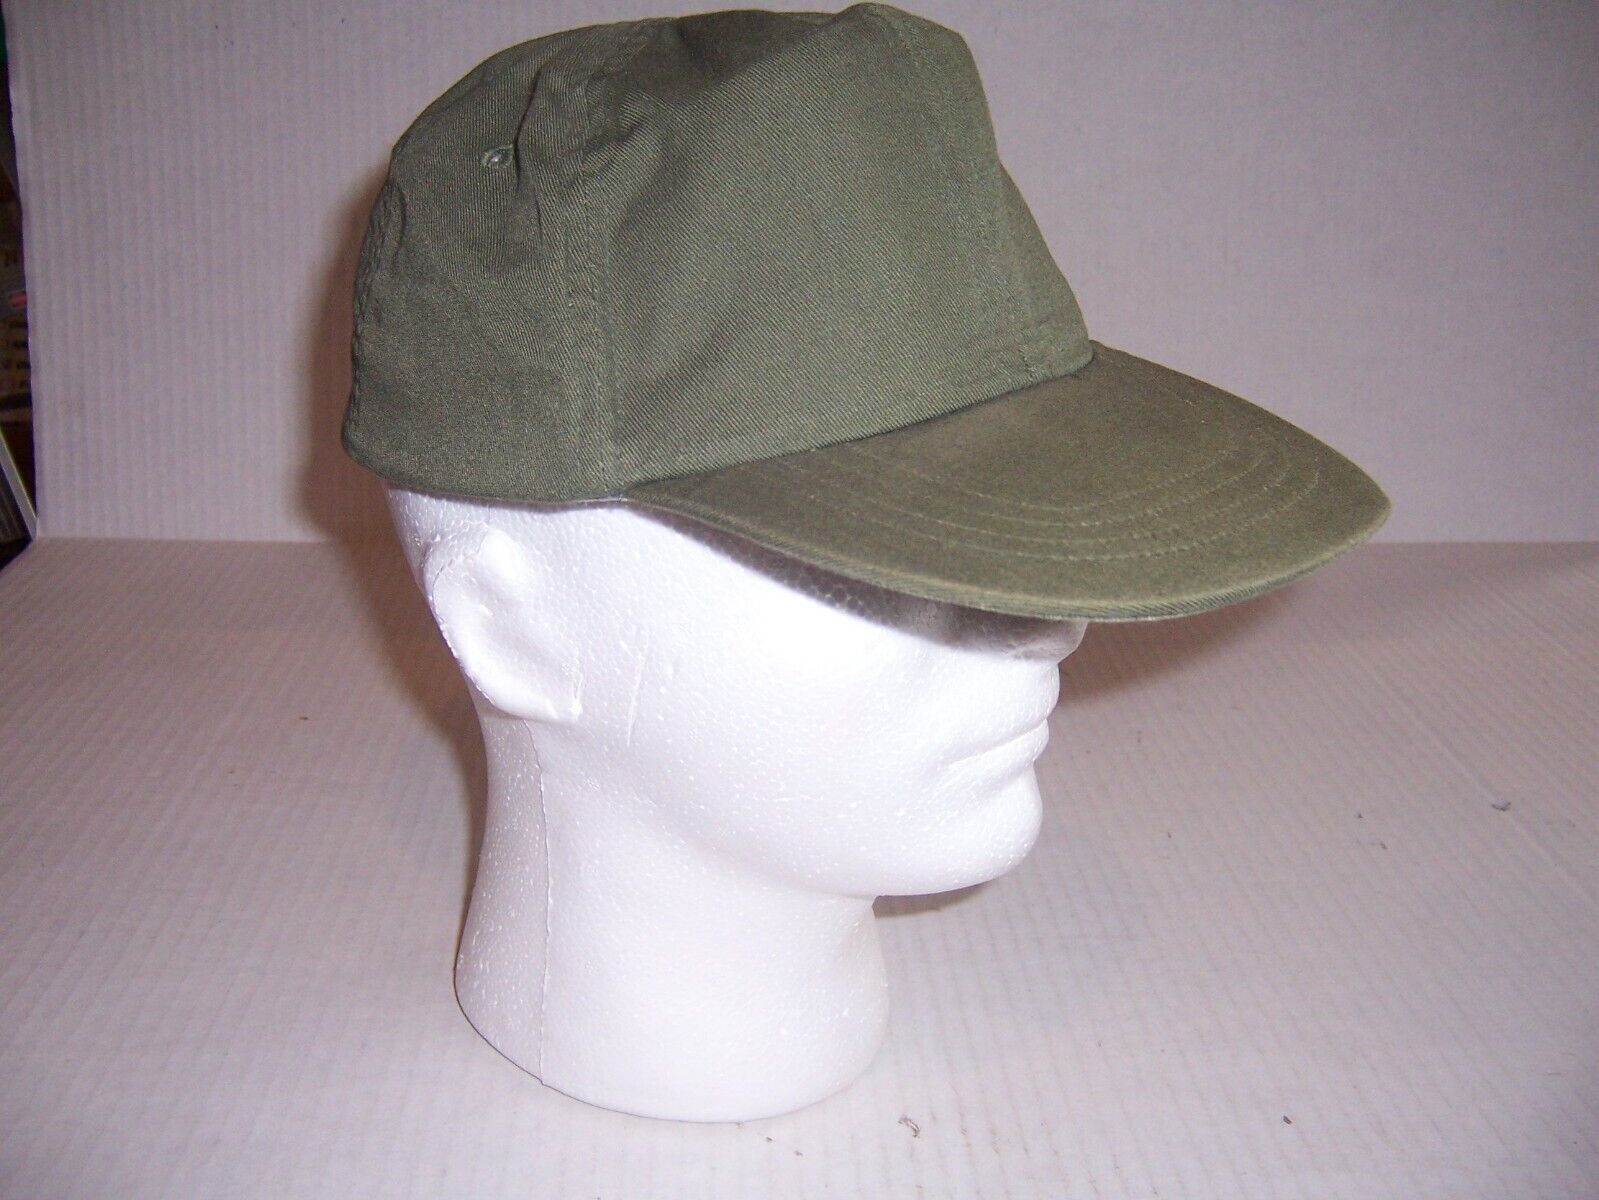 Size 7 Hot Weather Cap Hat Genuine U.S. Military Vietnam war 60's-70's